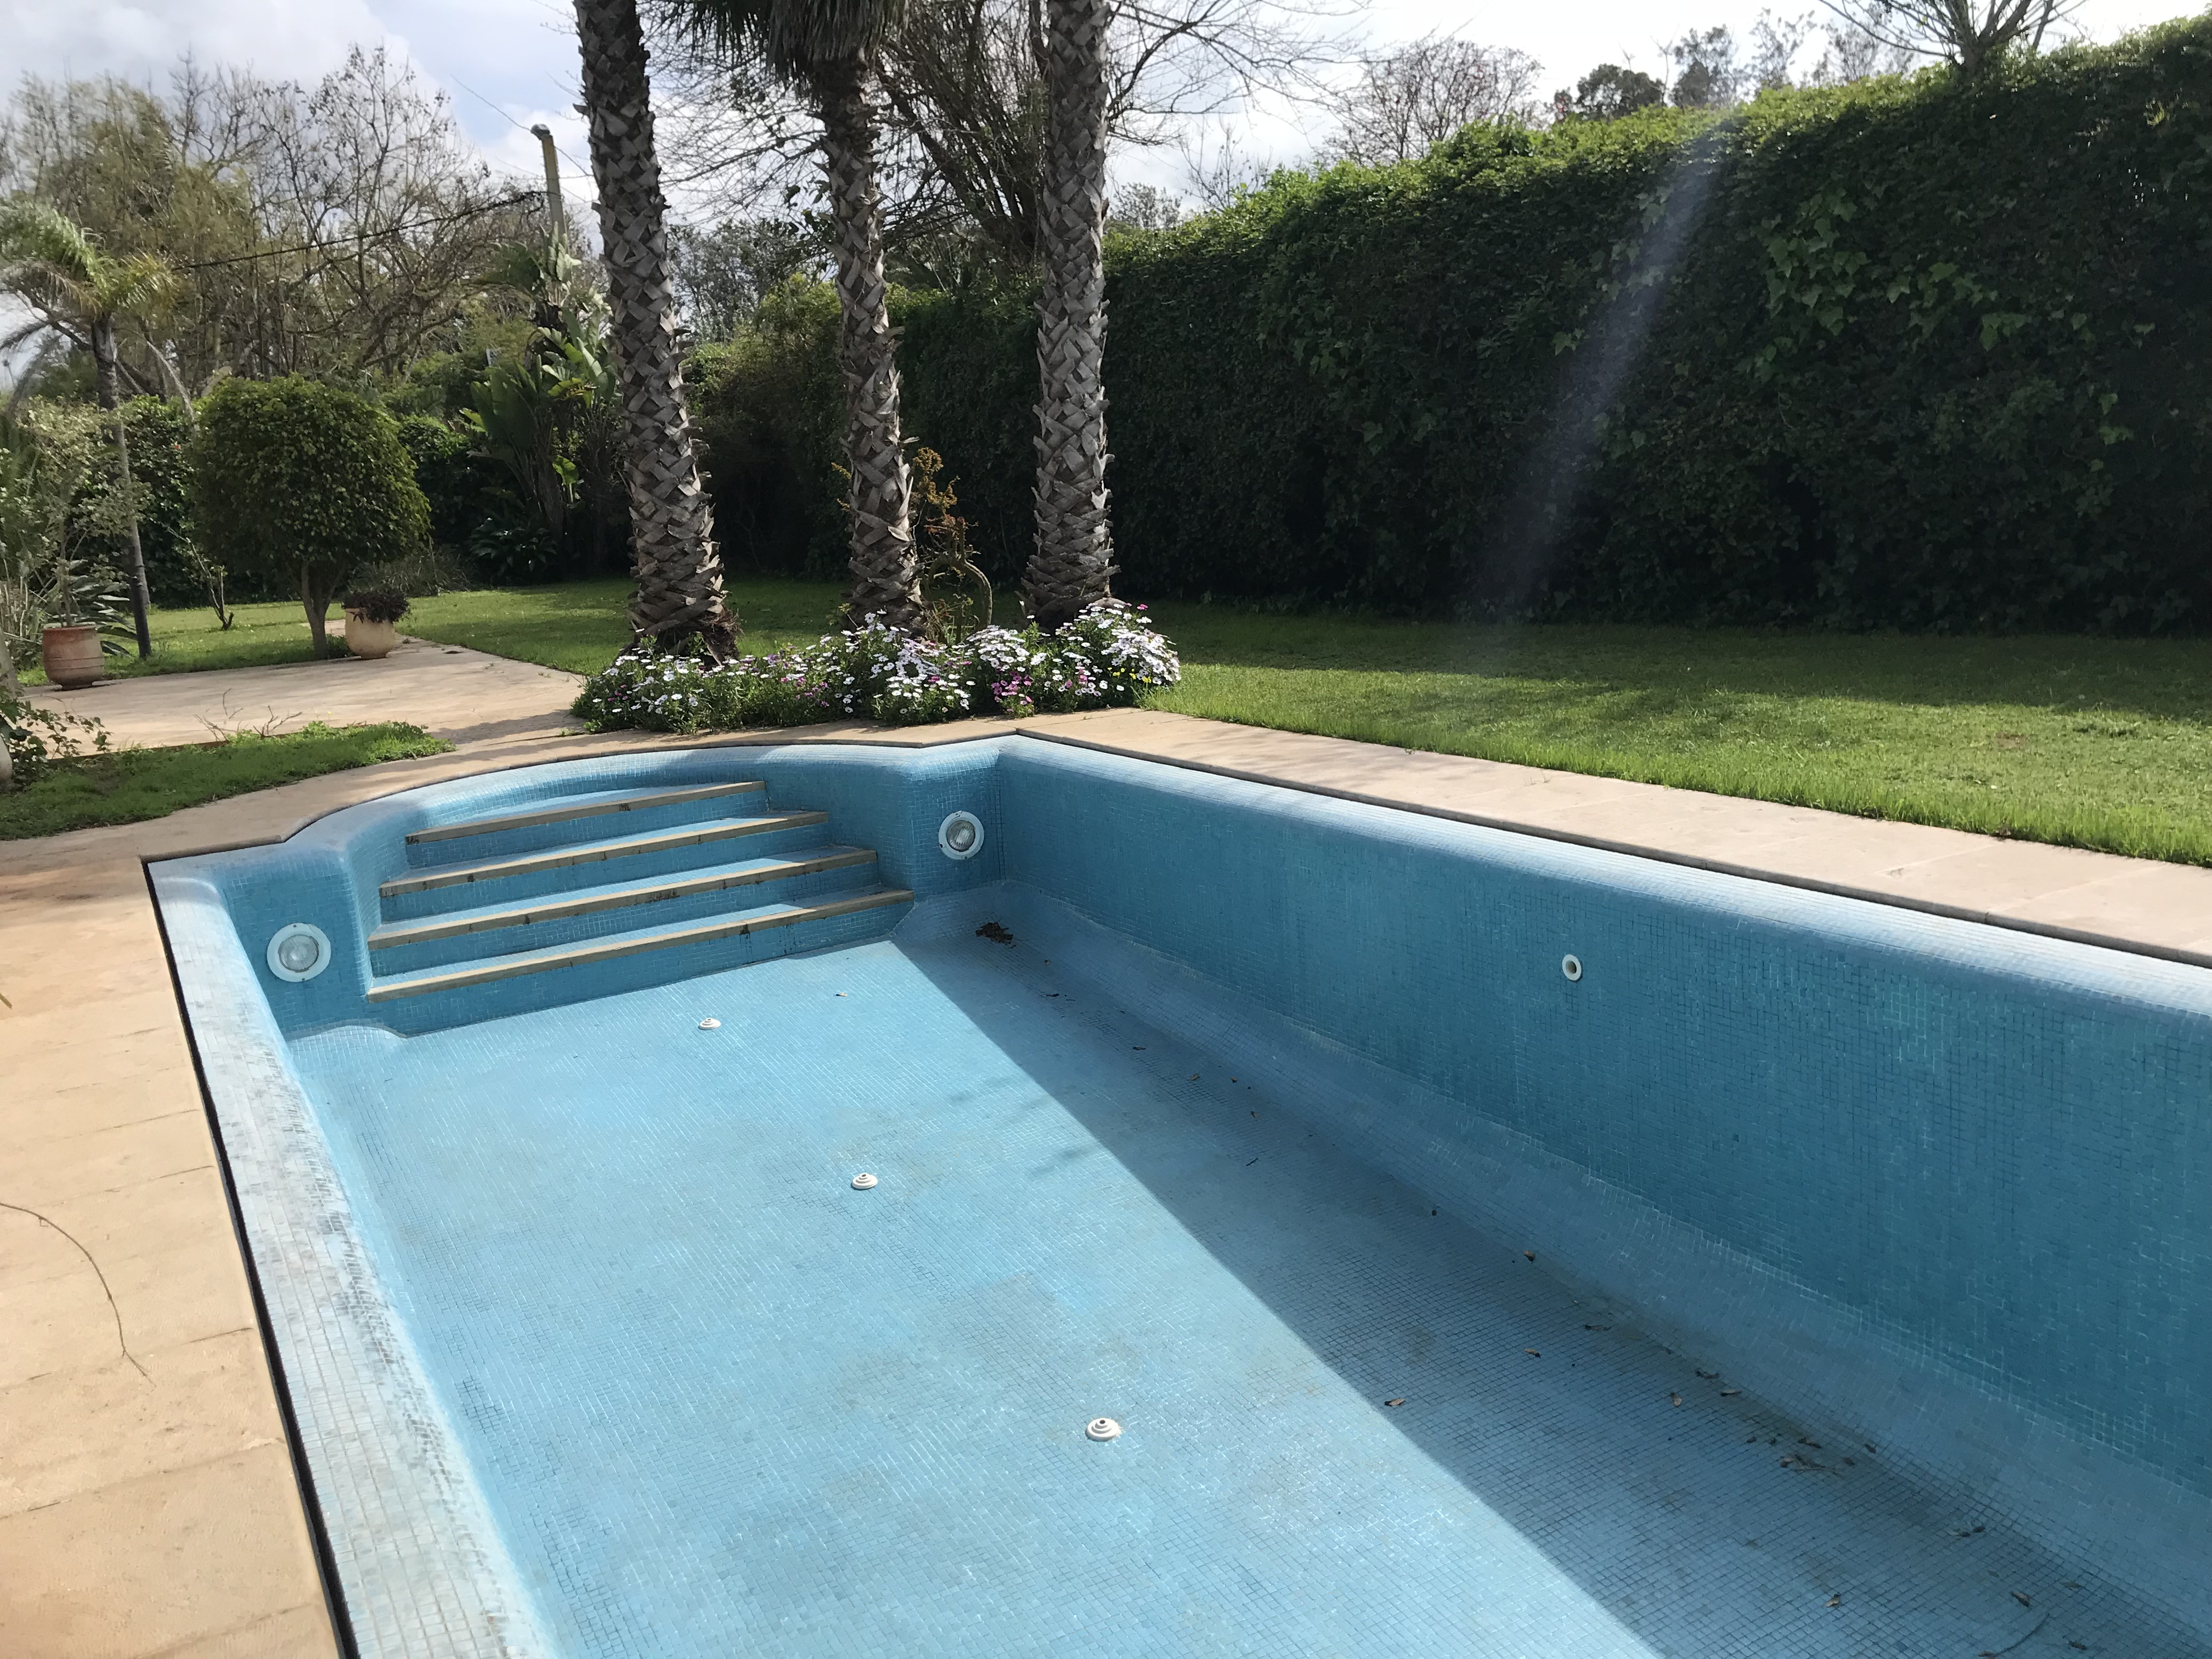 Location Rabat villa avec chauffage central et piscine